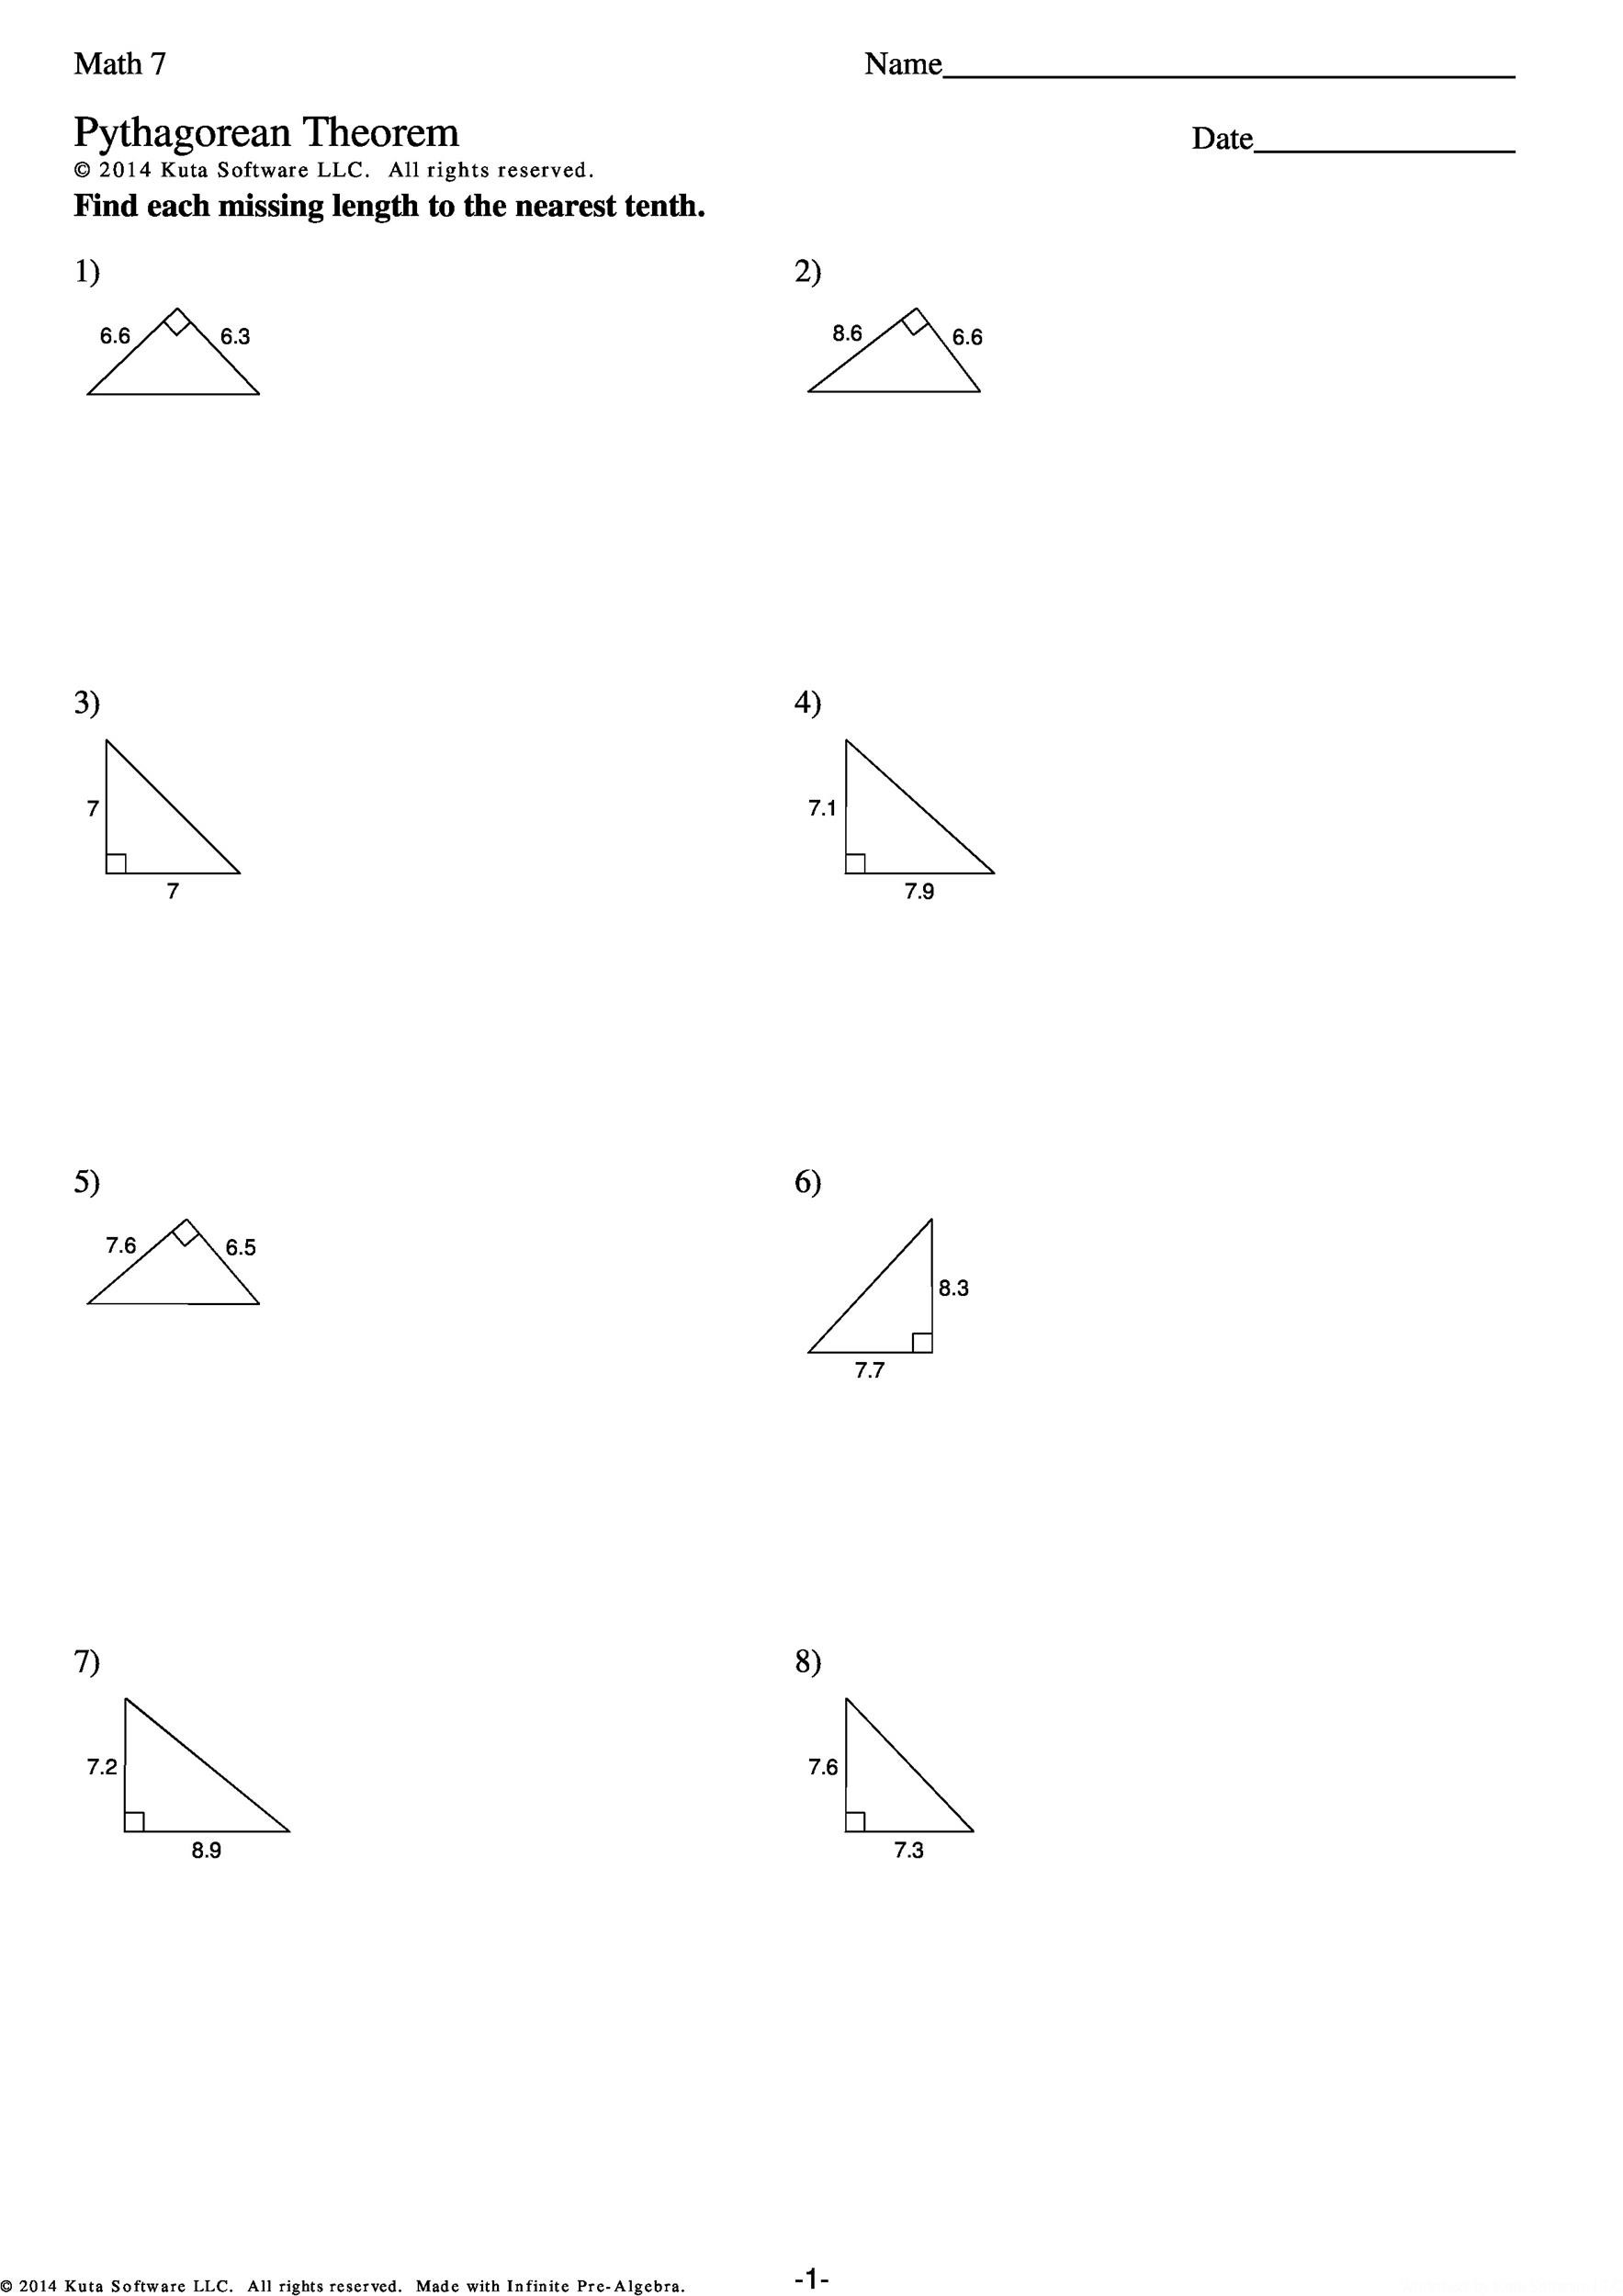 Pythagorean theorem Practice Worksheet 48 Pythagorean theorem Worksheet with Answers [word Pdf]